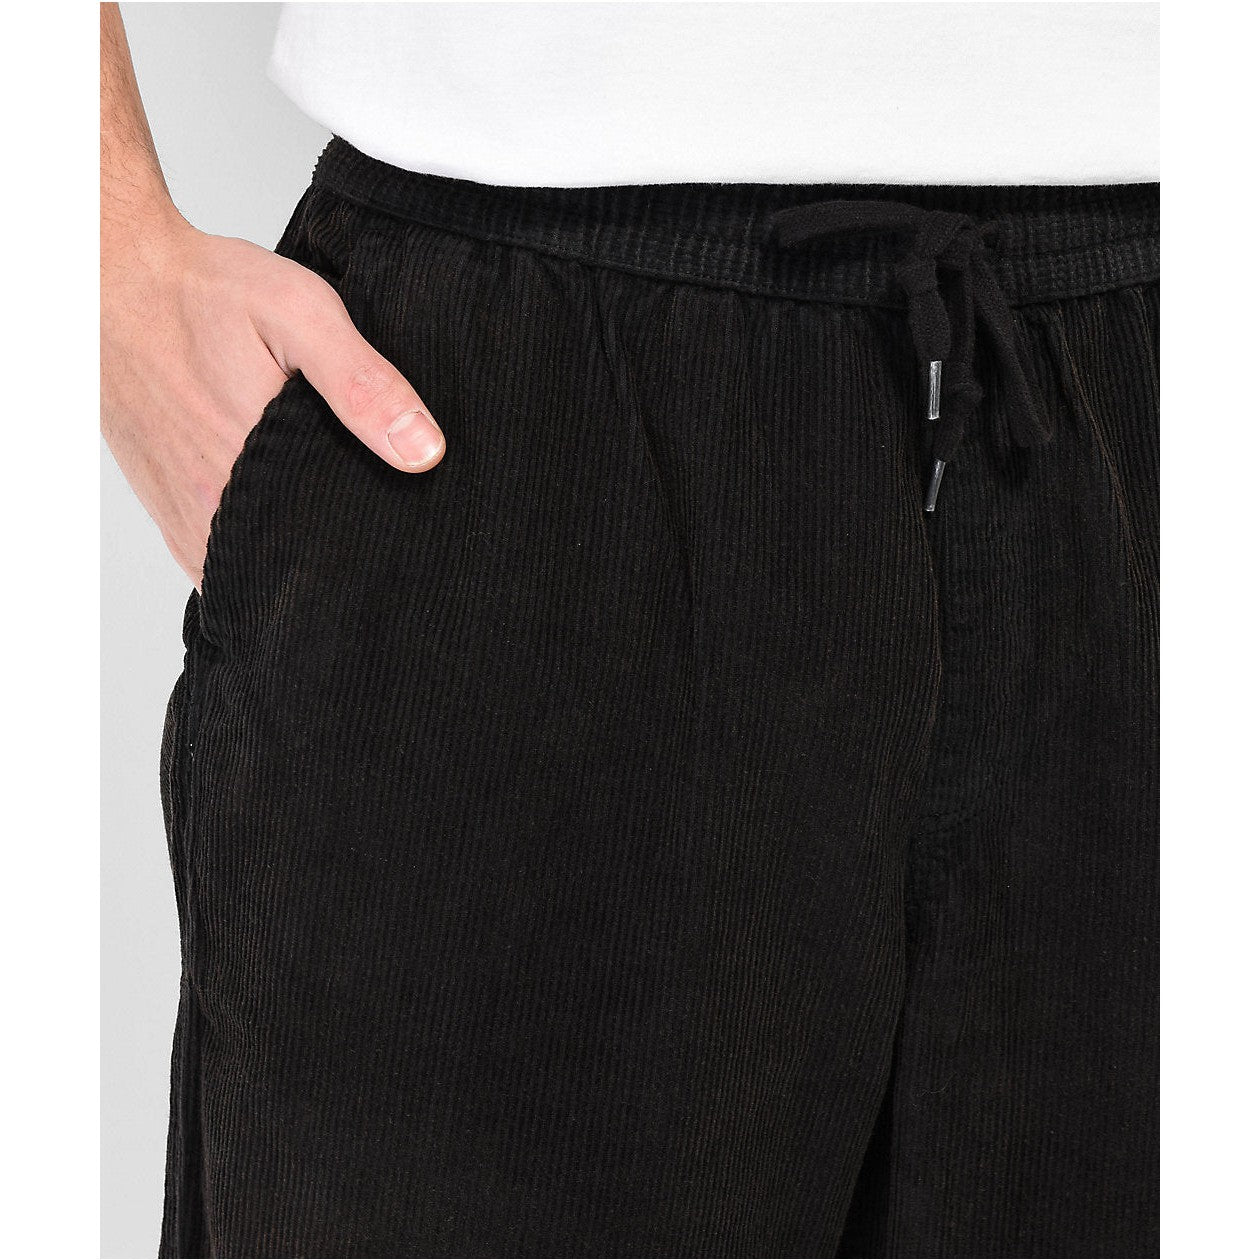 VANS - RANGE BLACK WASH CORDUROY PANTS